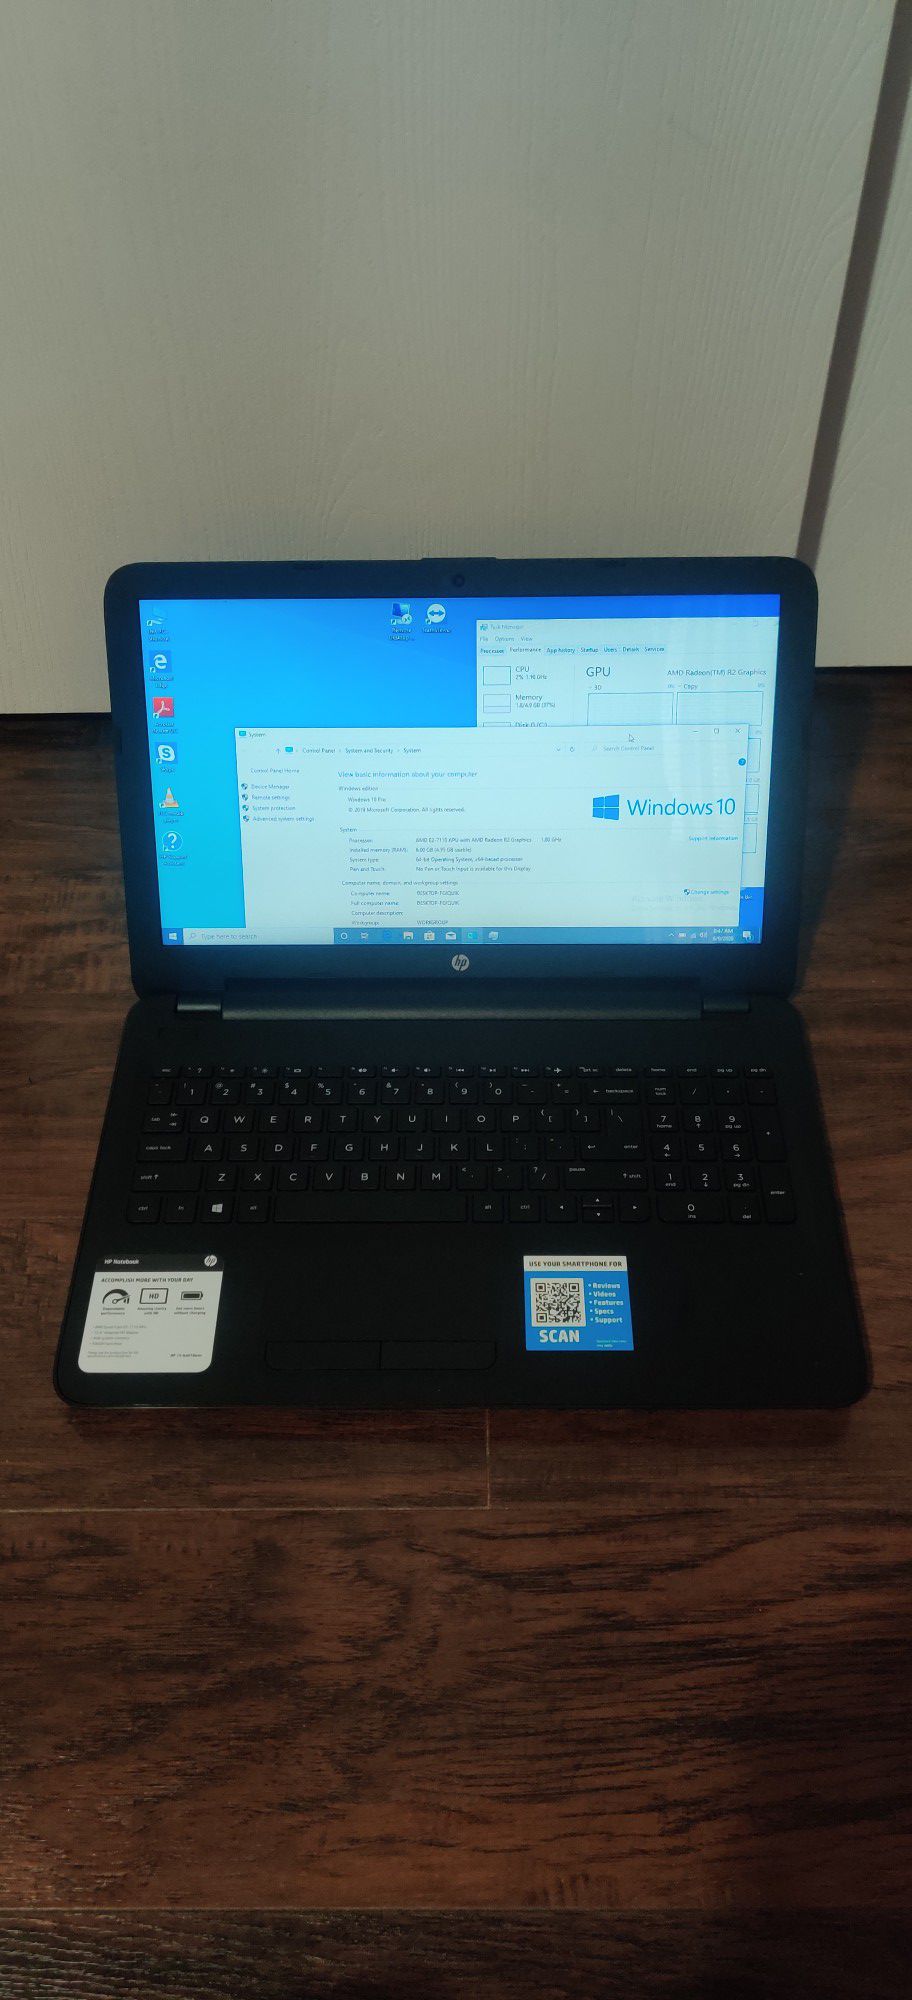 Windows 10 - HP Notebook - 15-ba018wm - AMD E2 7110 with Radeon R2 Graphics - 250 Gb SSD